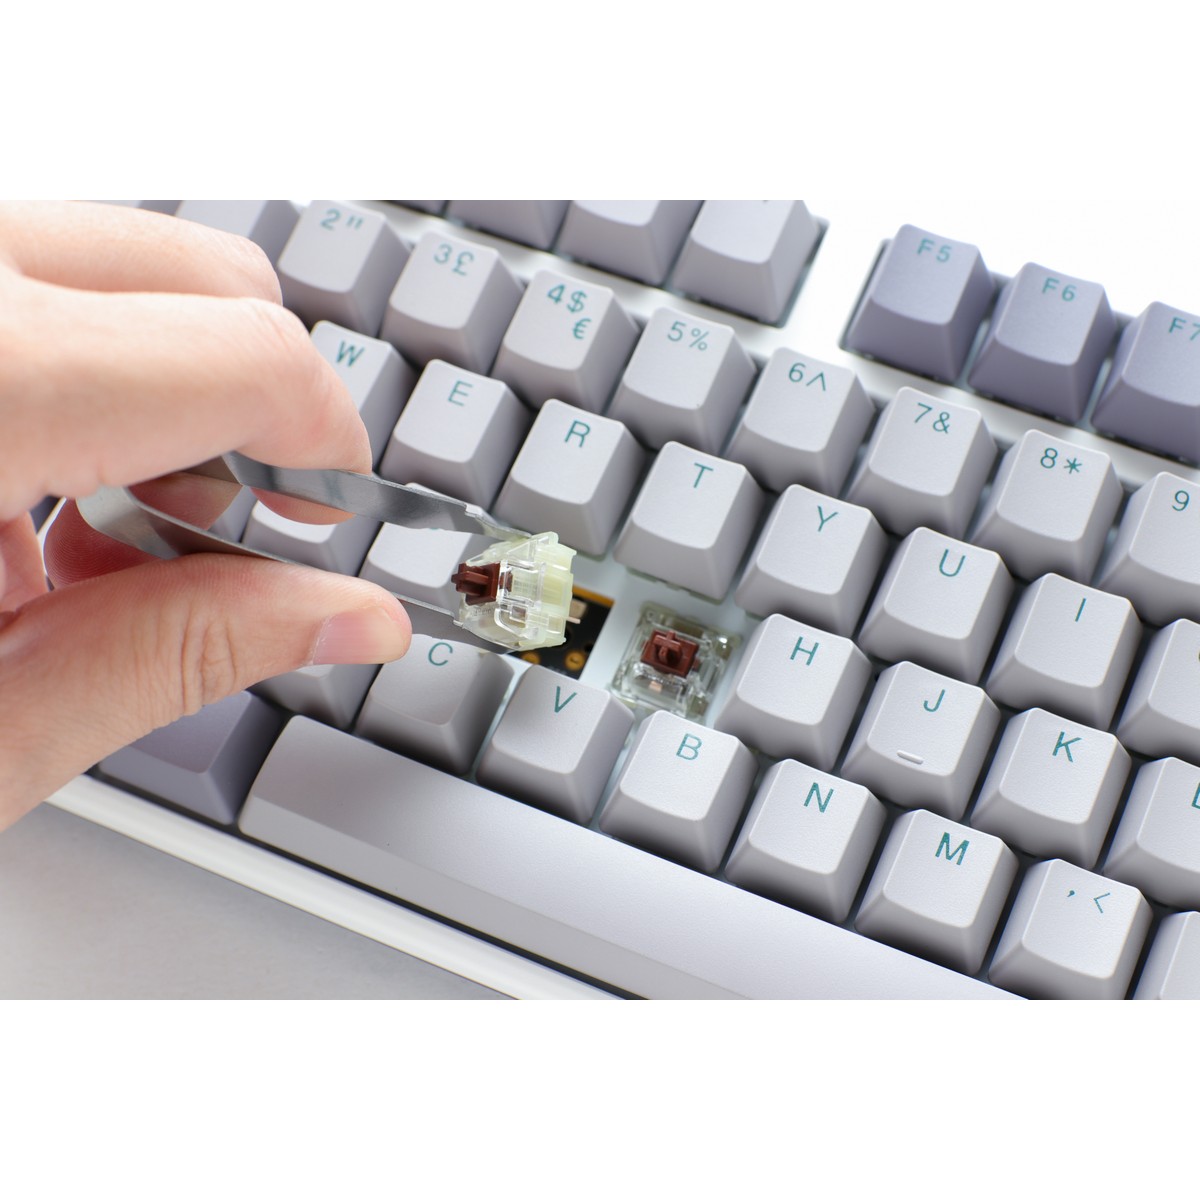 Ducky - Ducky One 3 Mist USB RGB Mechanical Gaming Keyboard Cherry MX Speed Silver Switch - UK Layout